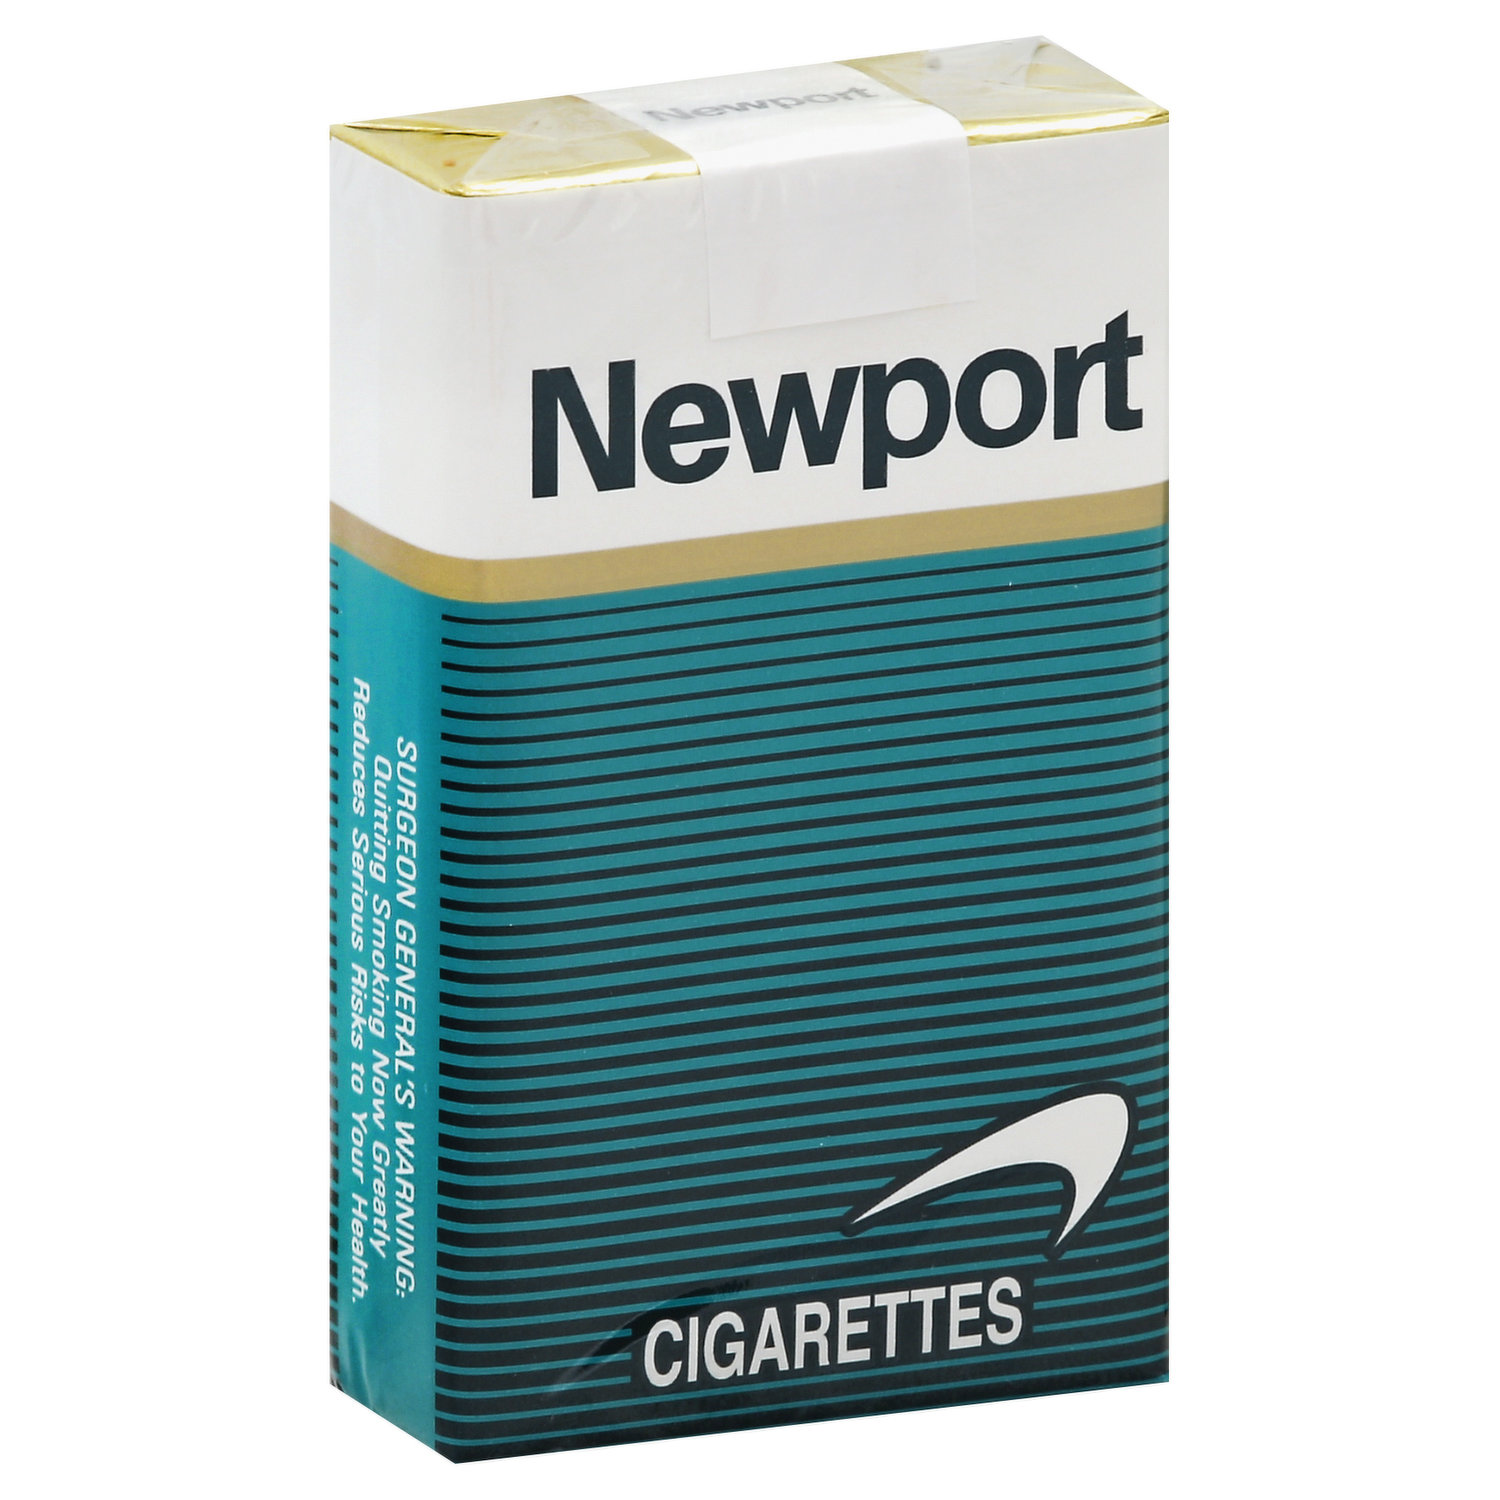 Marlboro Cigarettes, Silver Pack, Menthol, 100's